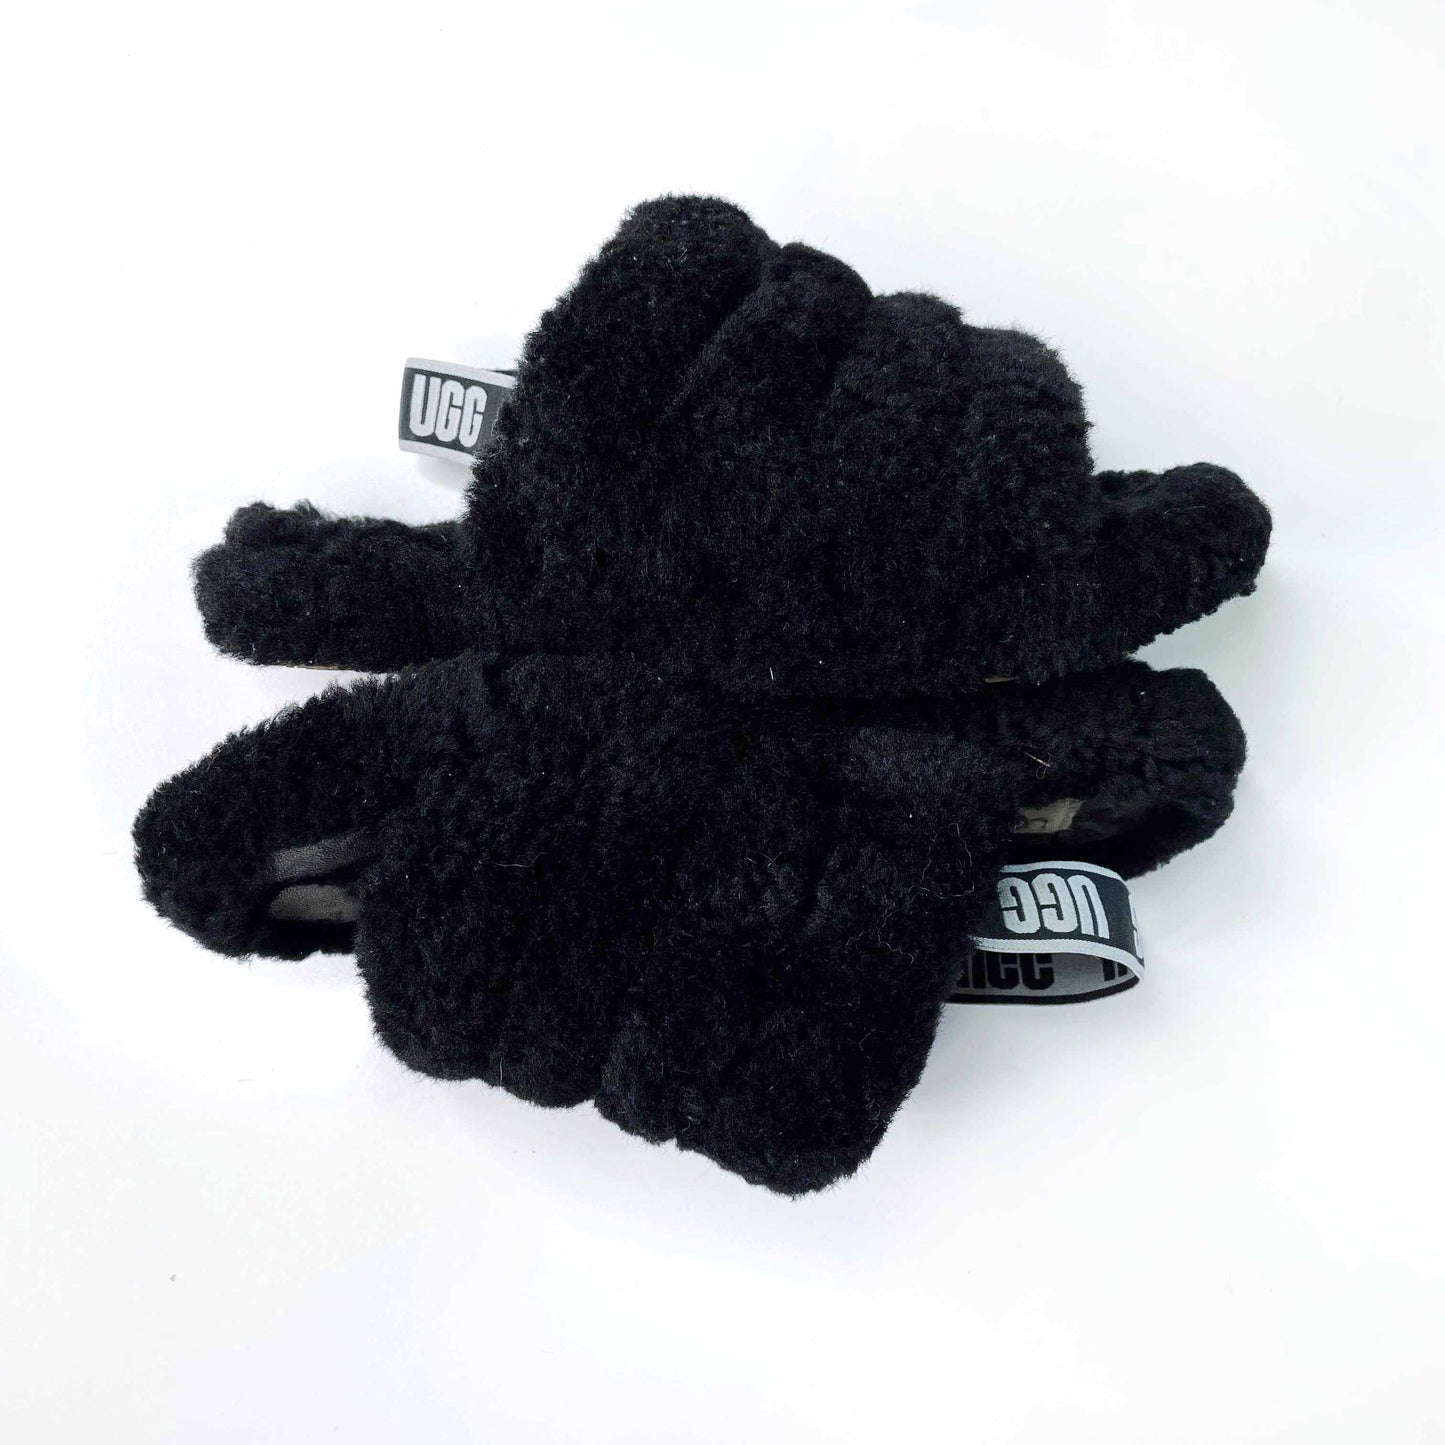 ugg black fluff yeah sheepskin slide slippers - size 8.5